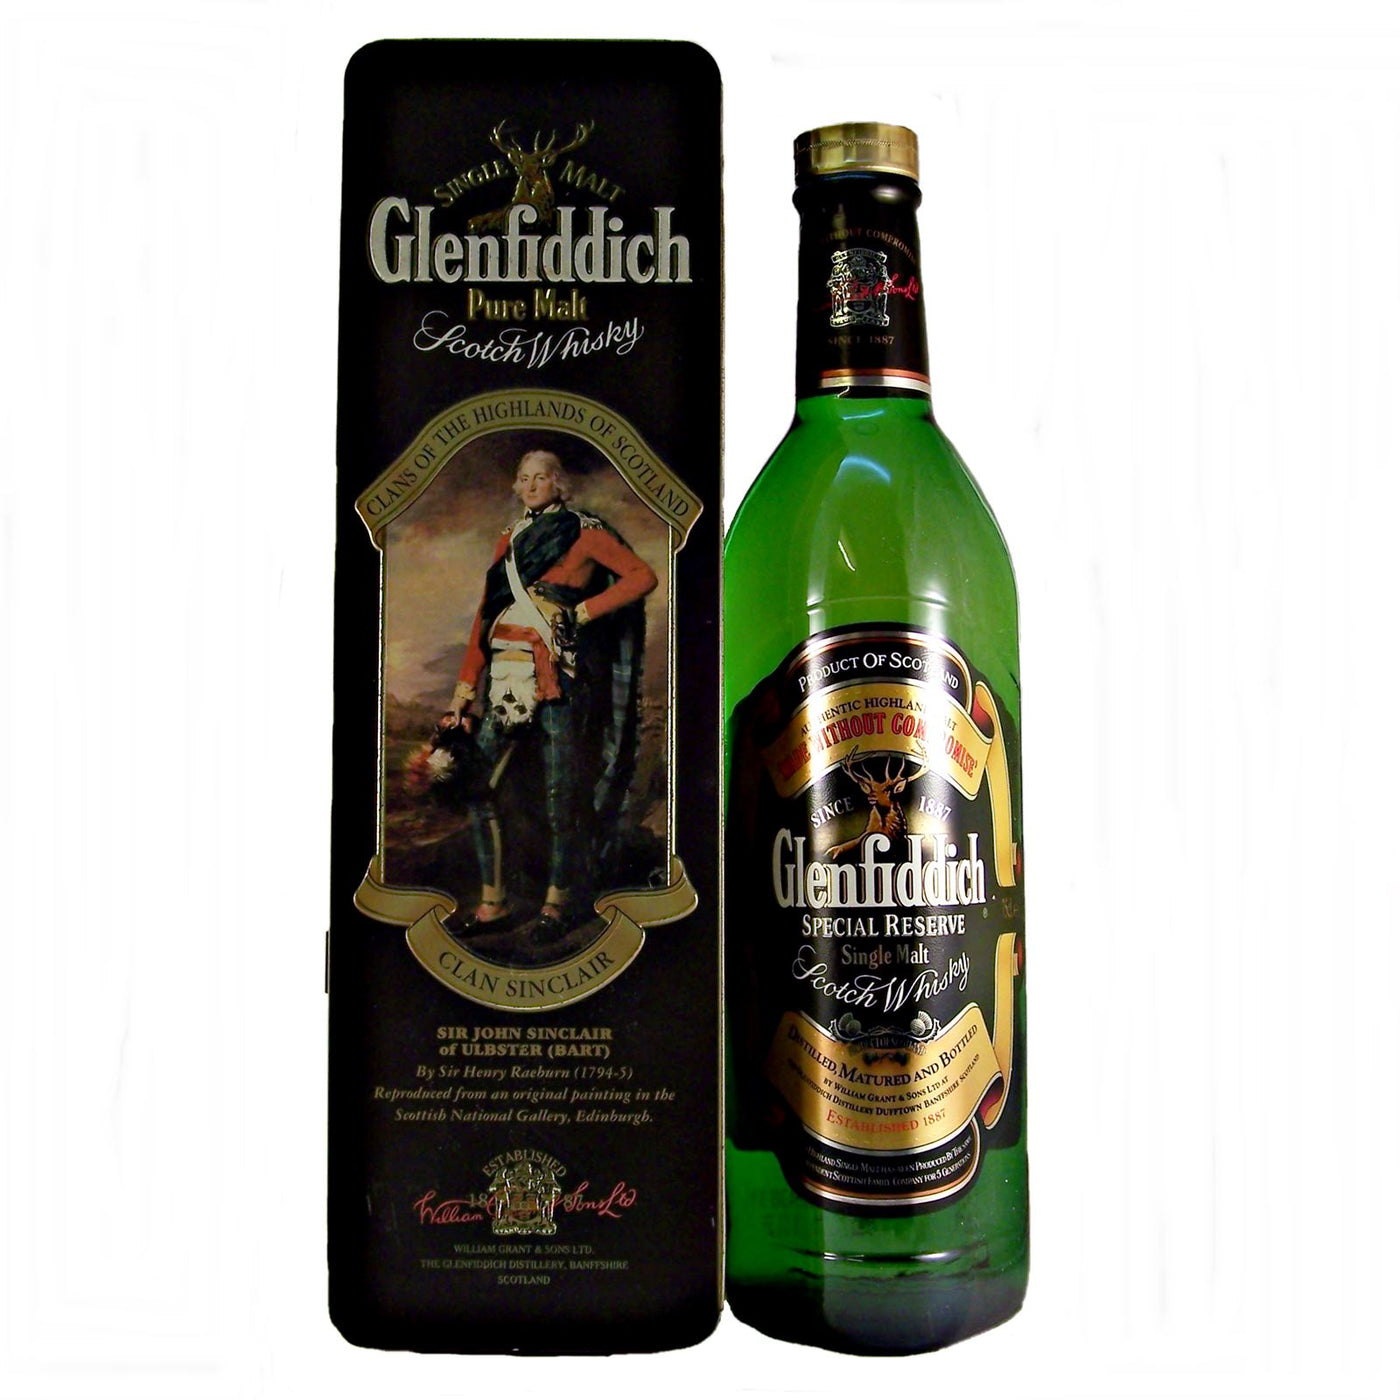 BUY] Glenfiddich Pure Malt, Clan Sinclair Scotch Whisky at CaskCartel.com